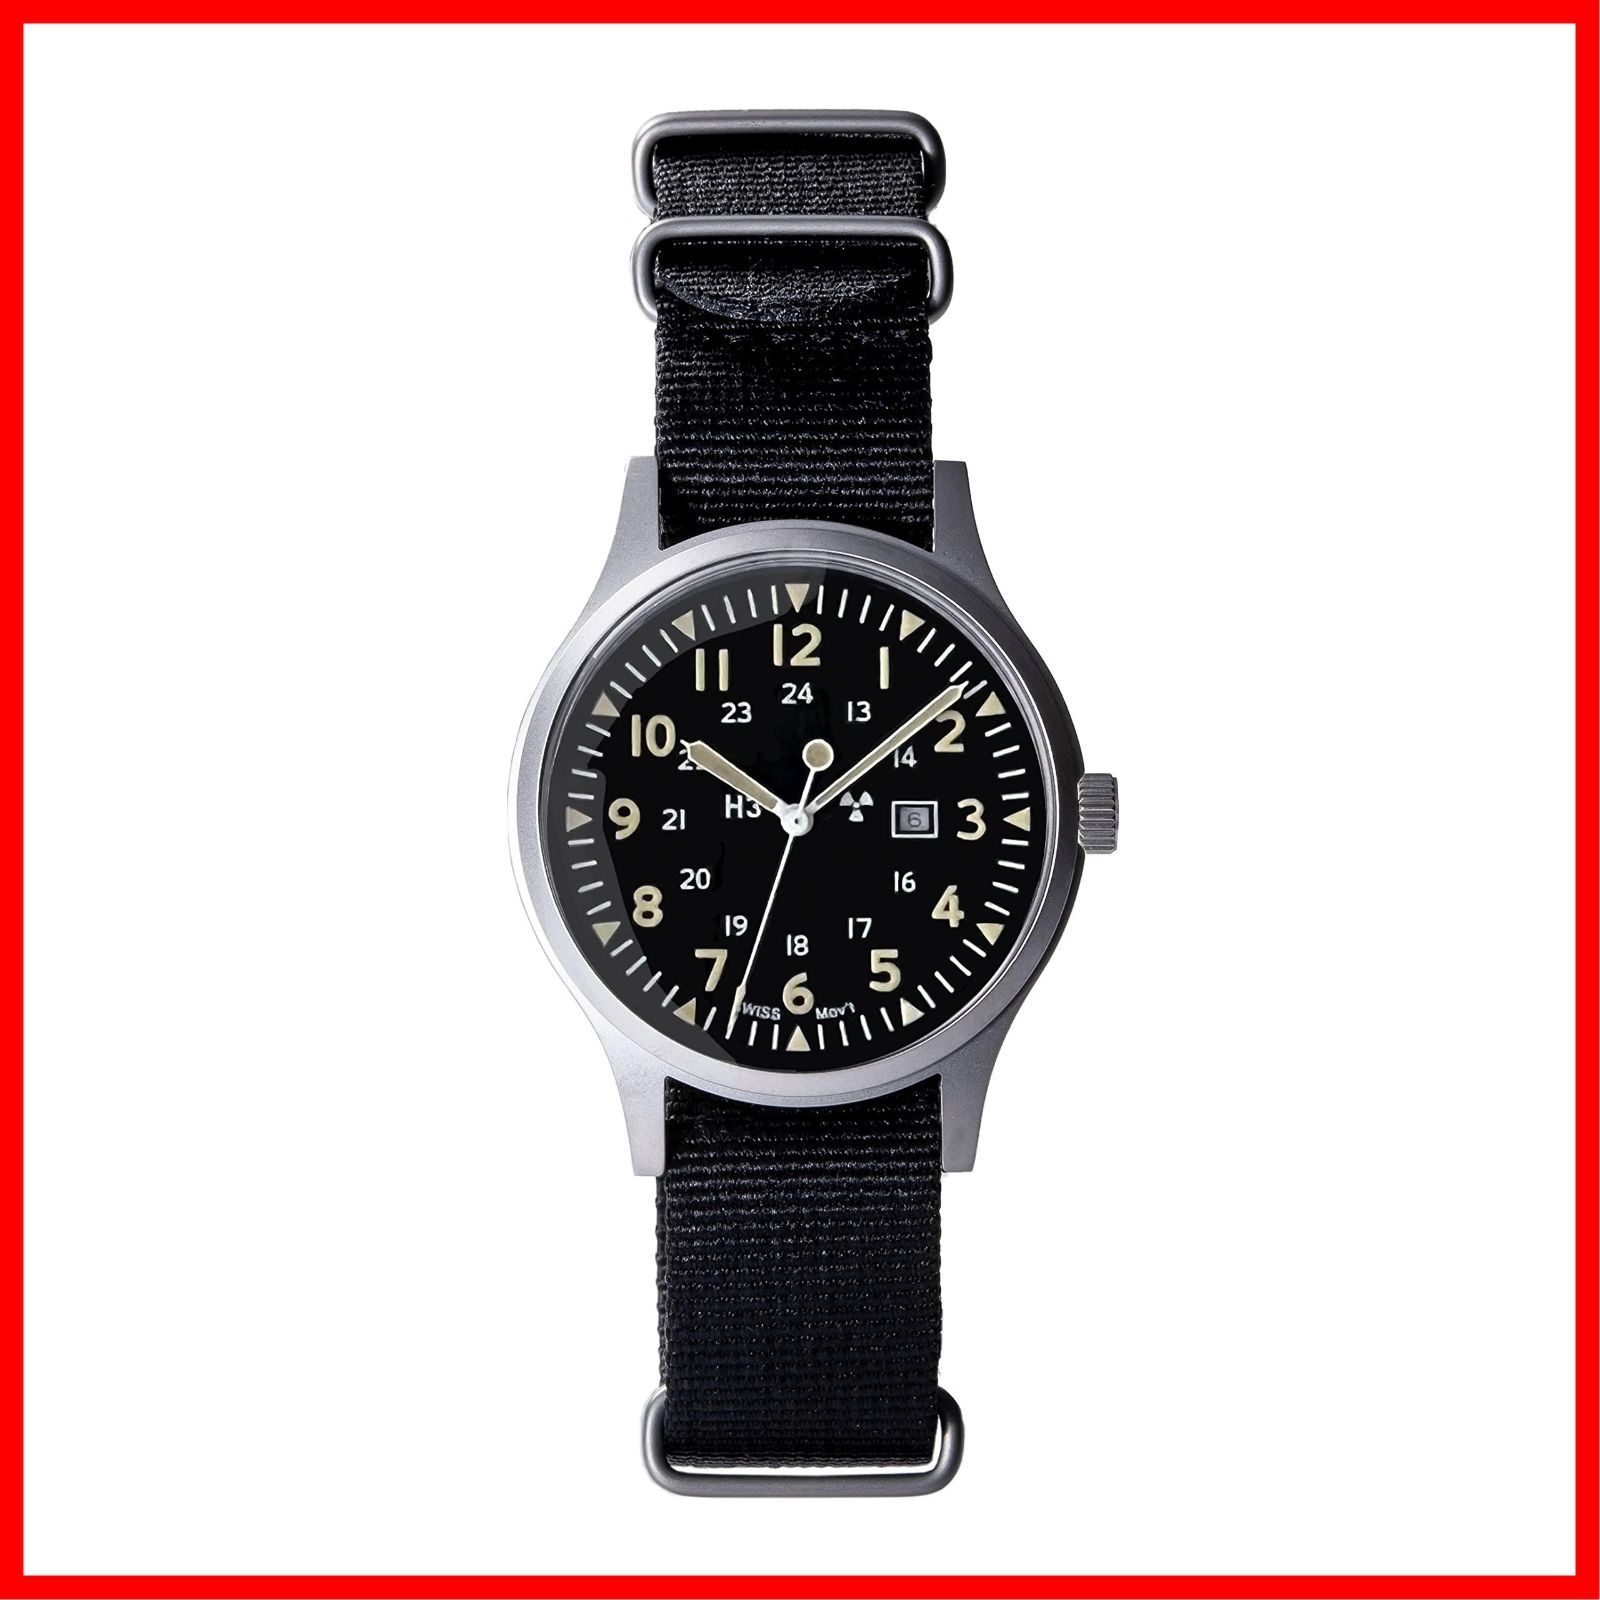 Naval watch co.] ミリタリーウォッチNaval Military watch Mil.-01B 